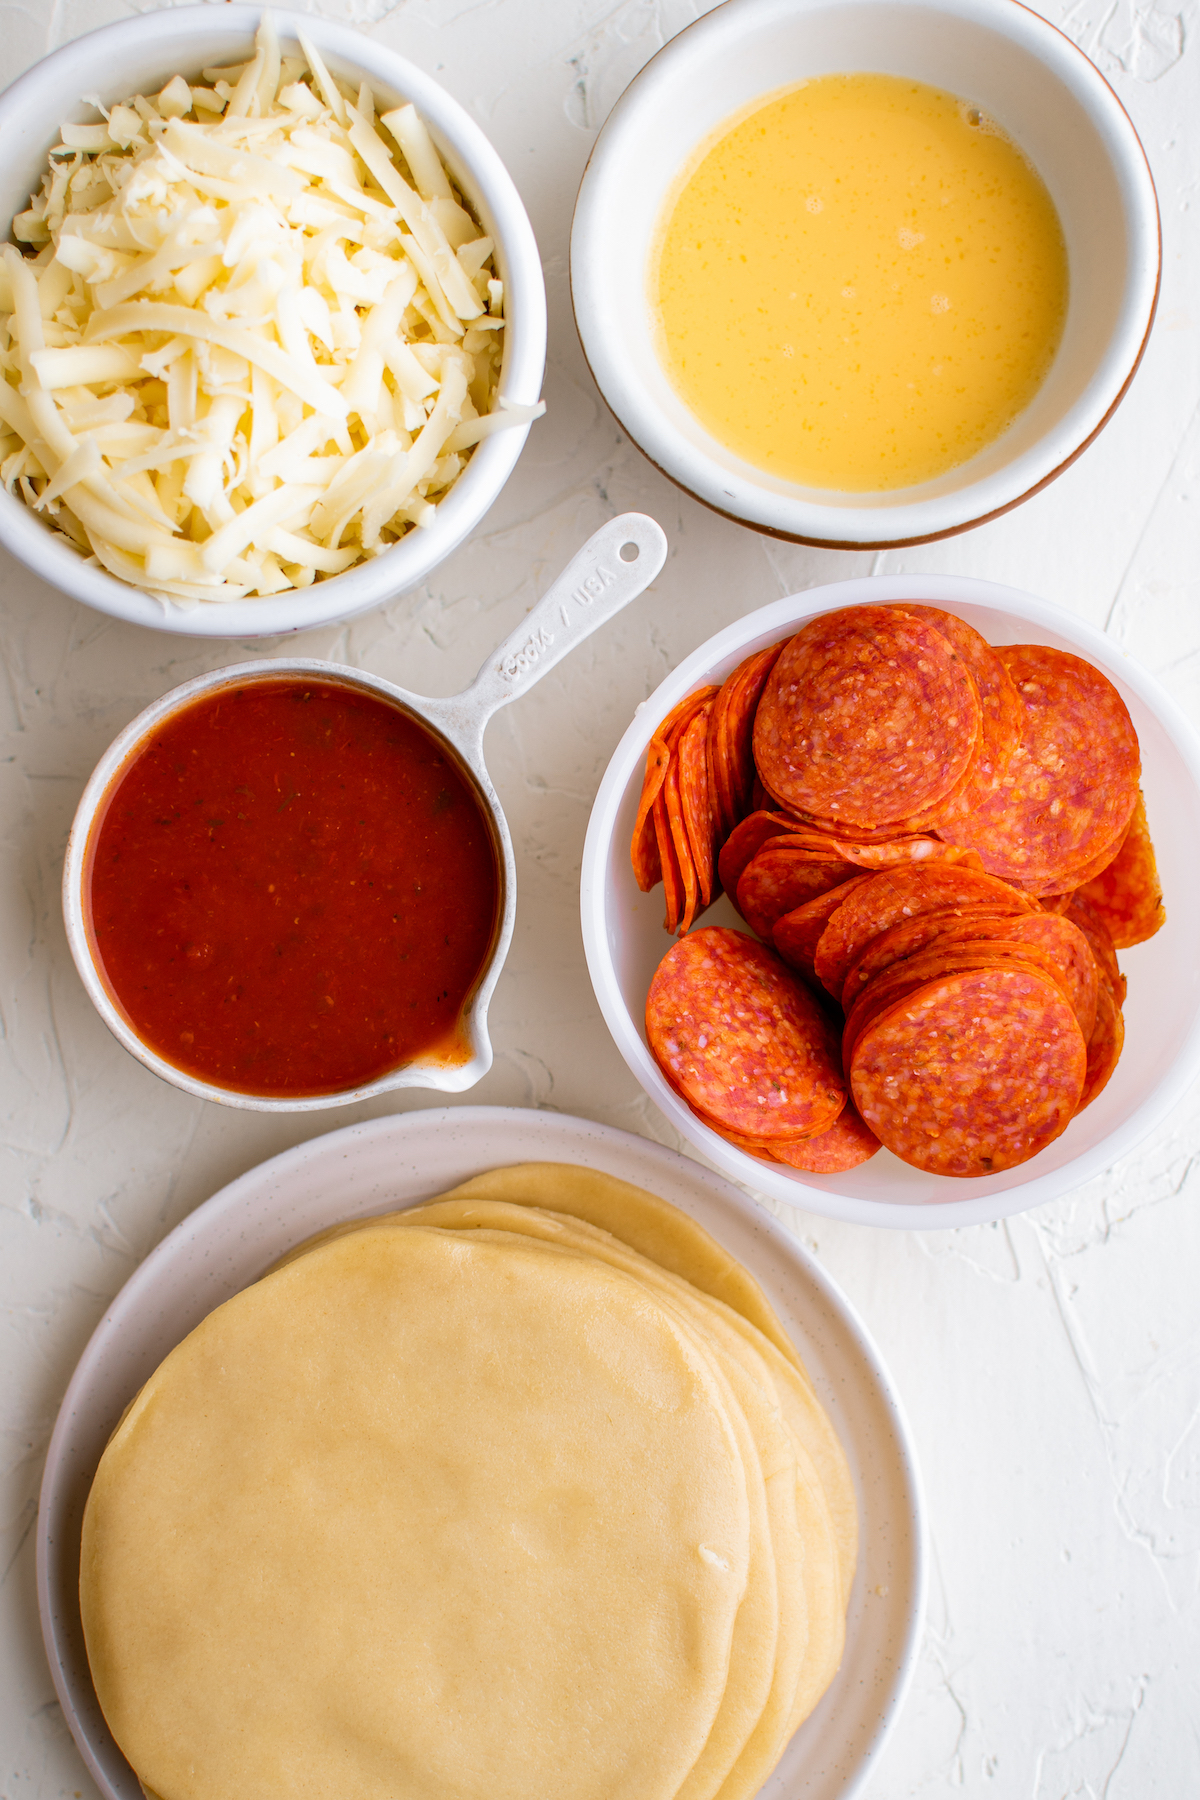 From top left: Shredded mozzarella cheese, egg wash, pizza sauce, pepperoni, and empanada dough.